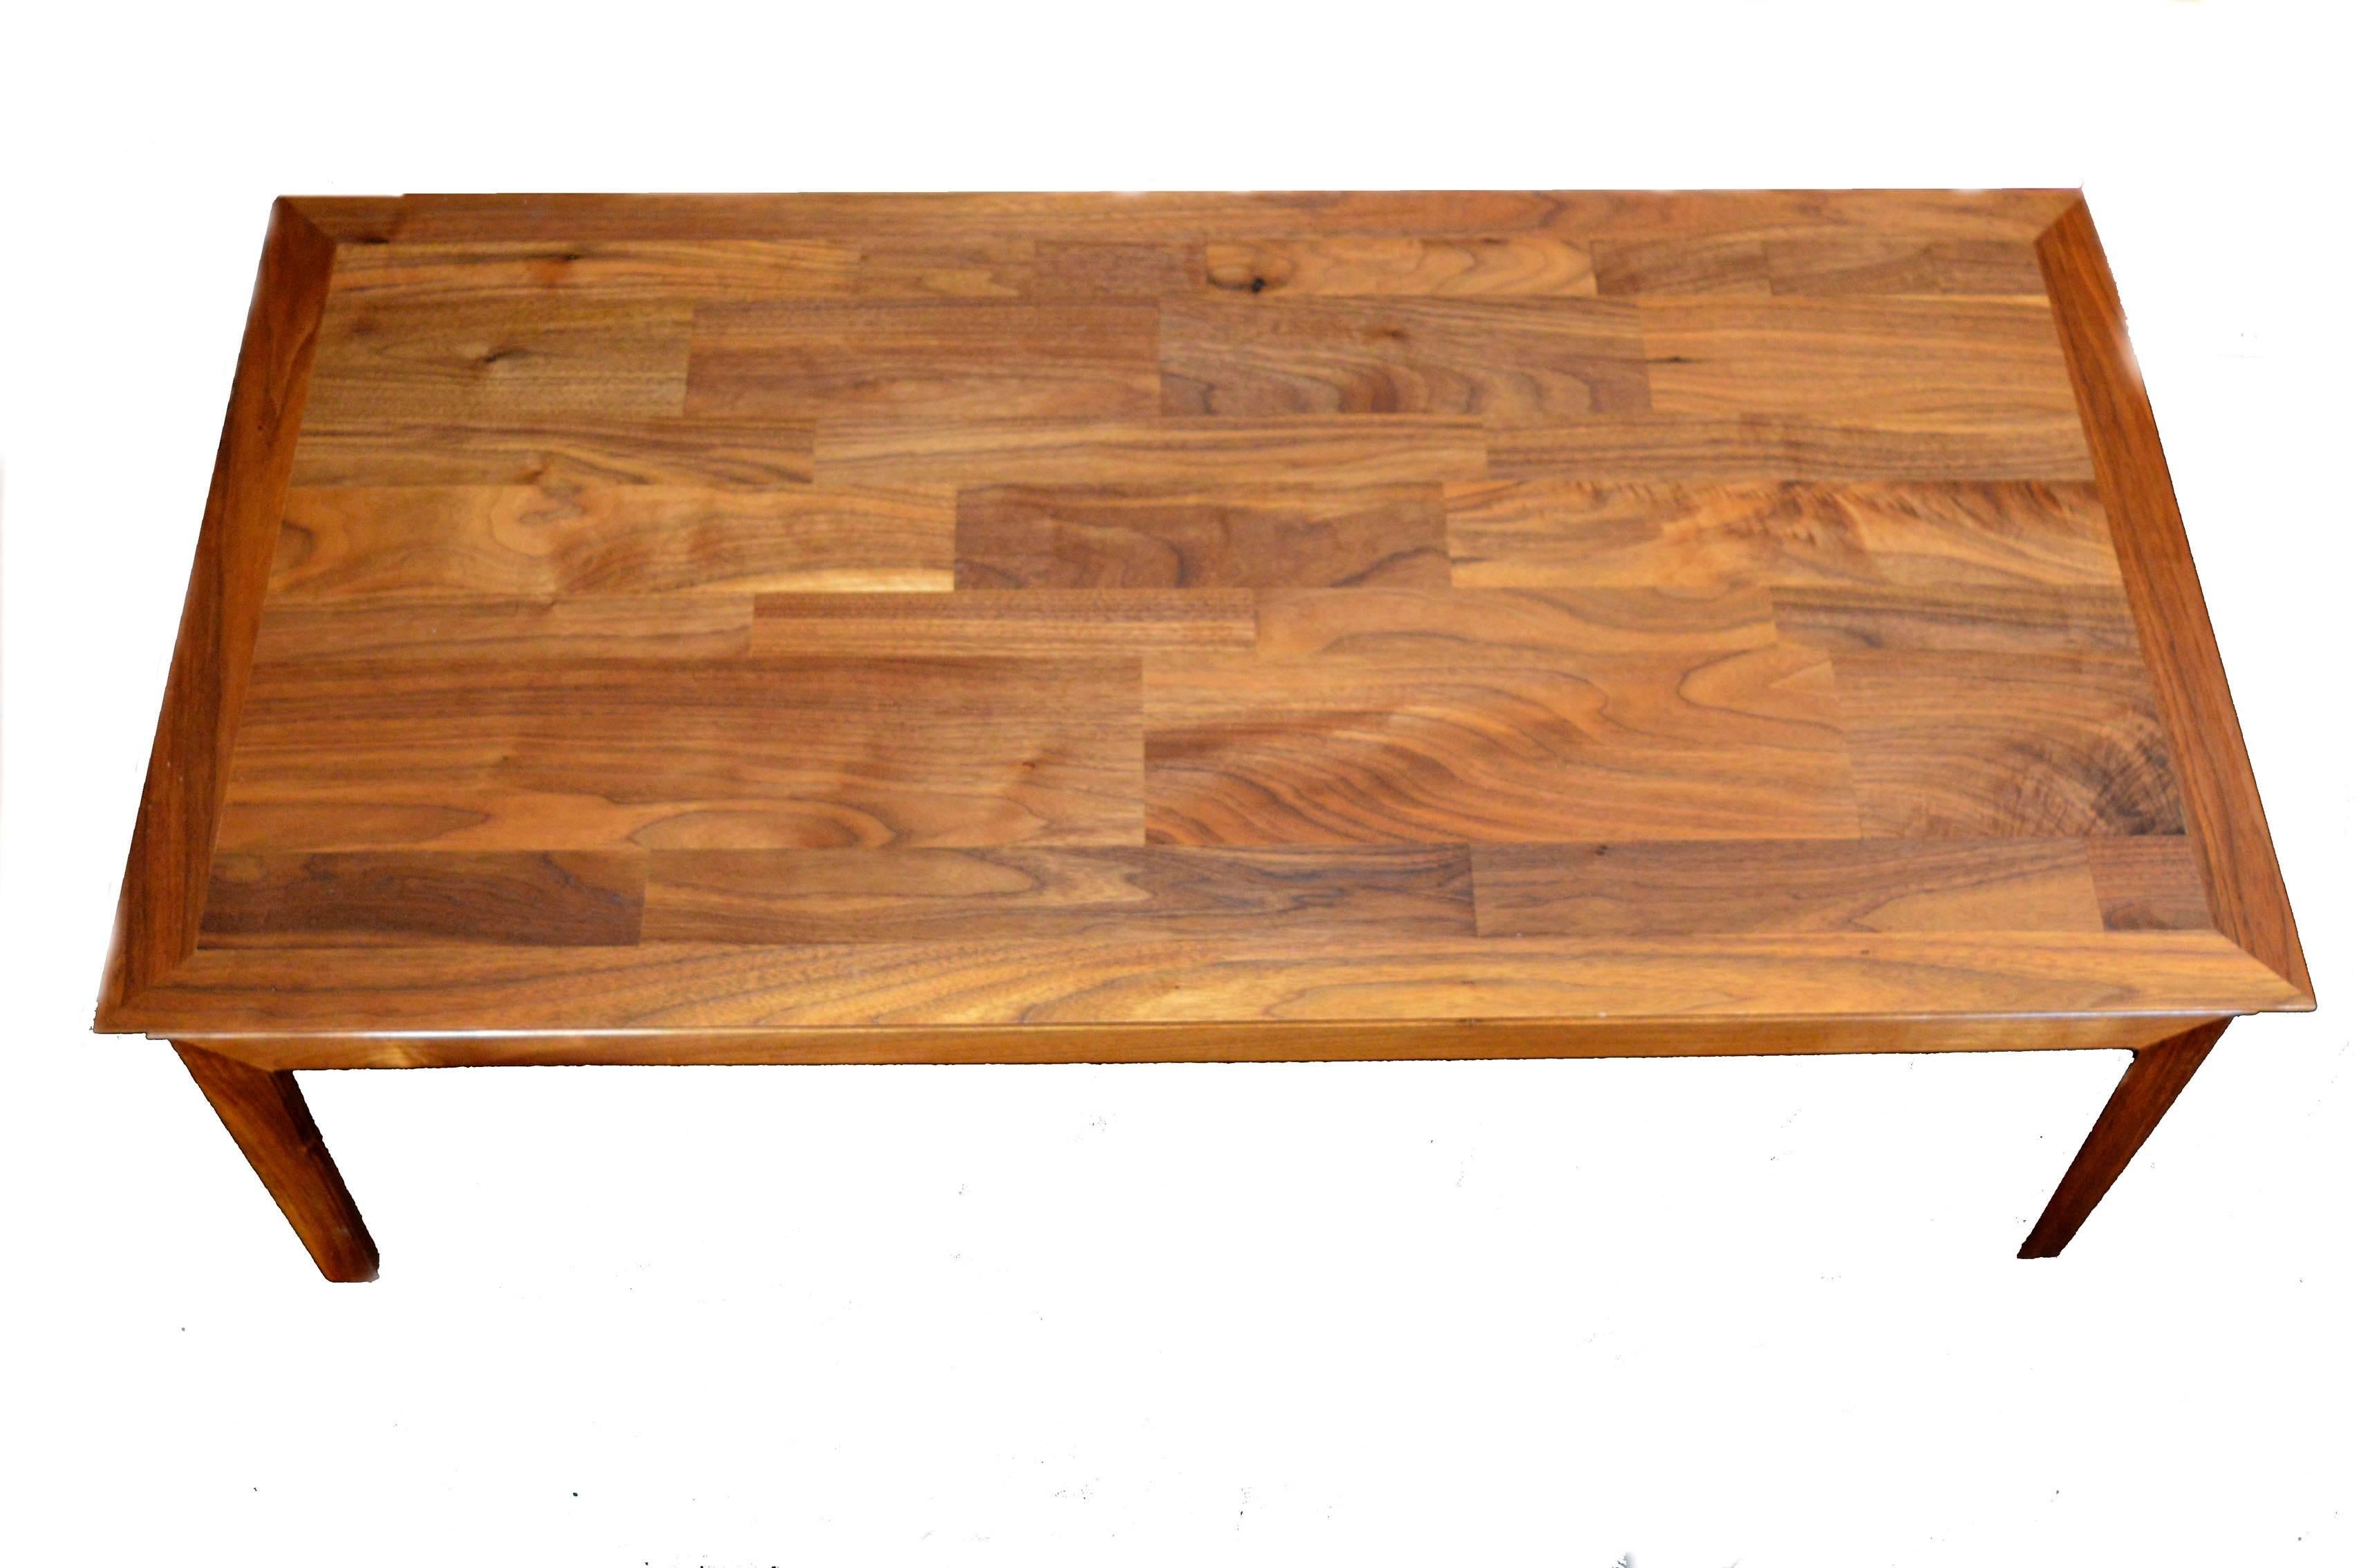 Koa wood coffee table by Paul Ayoob. Signed on verso 